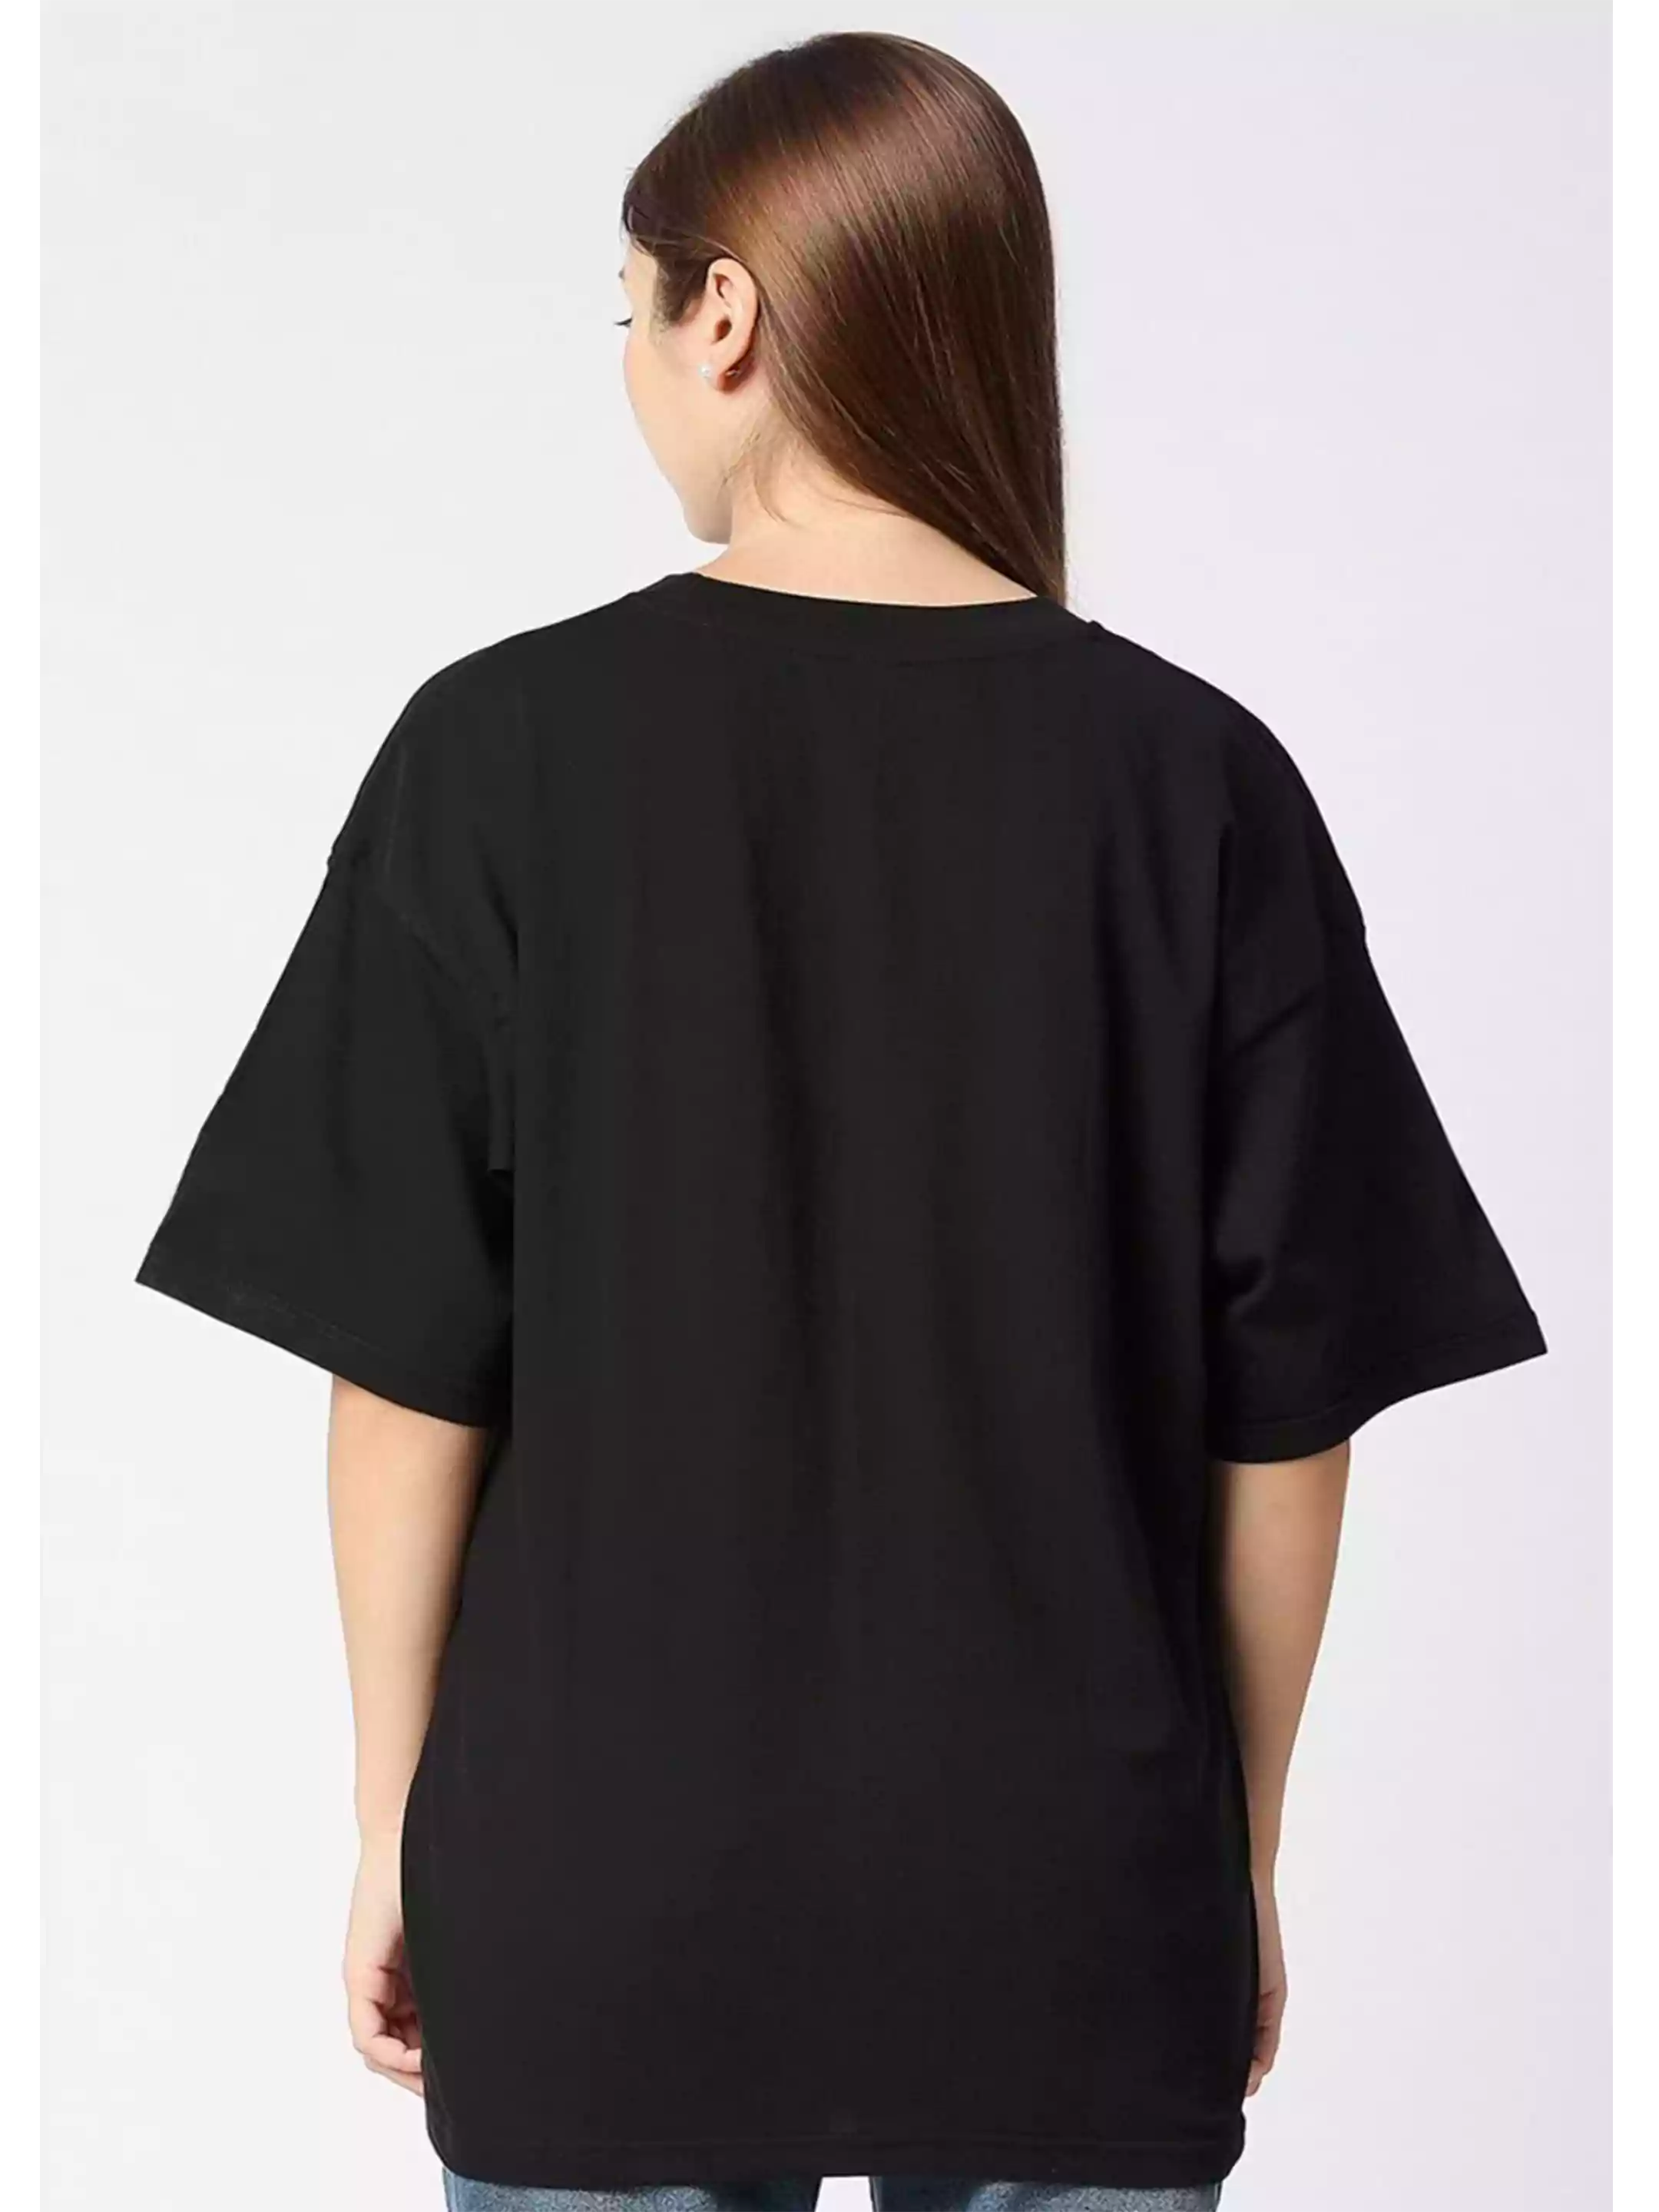 SA Contents Black - Sukhiaatma Unisex Oversize T-shirt